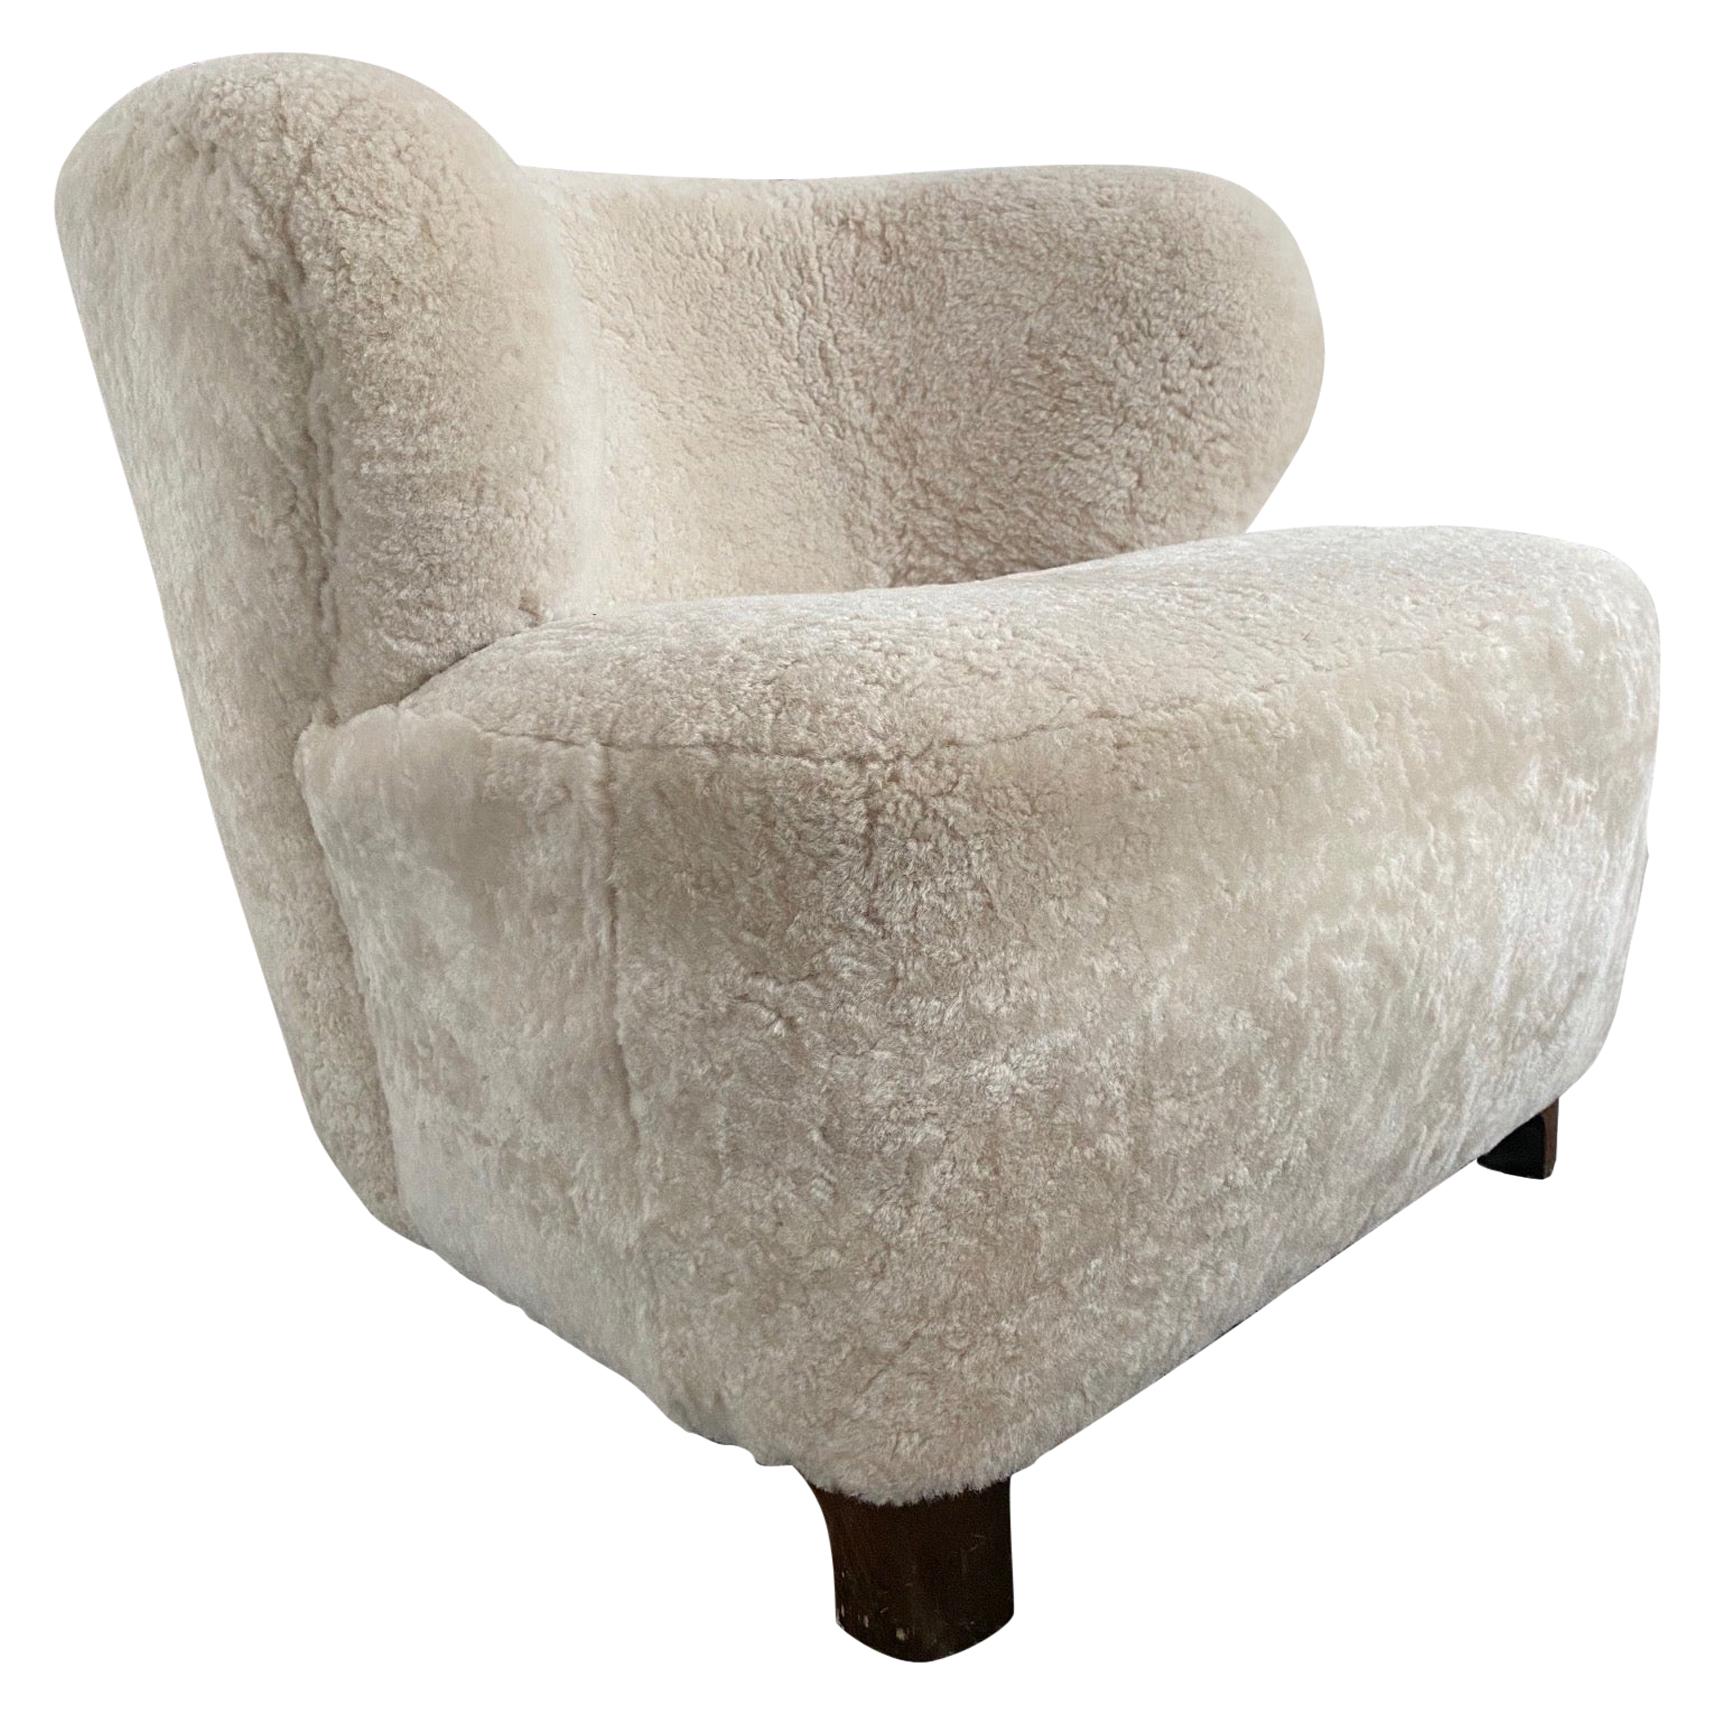 Danish 1940s Viggo Boesen Style Lounge Chair Upholstered in Cream Shearling